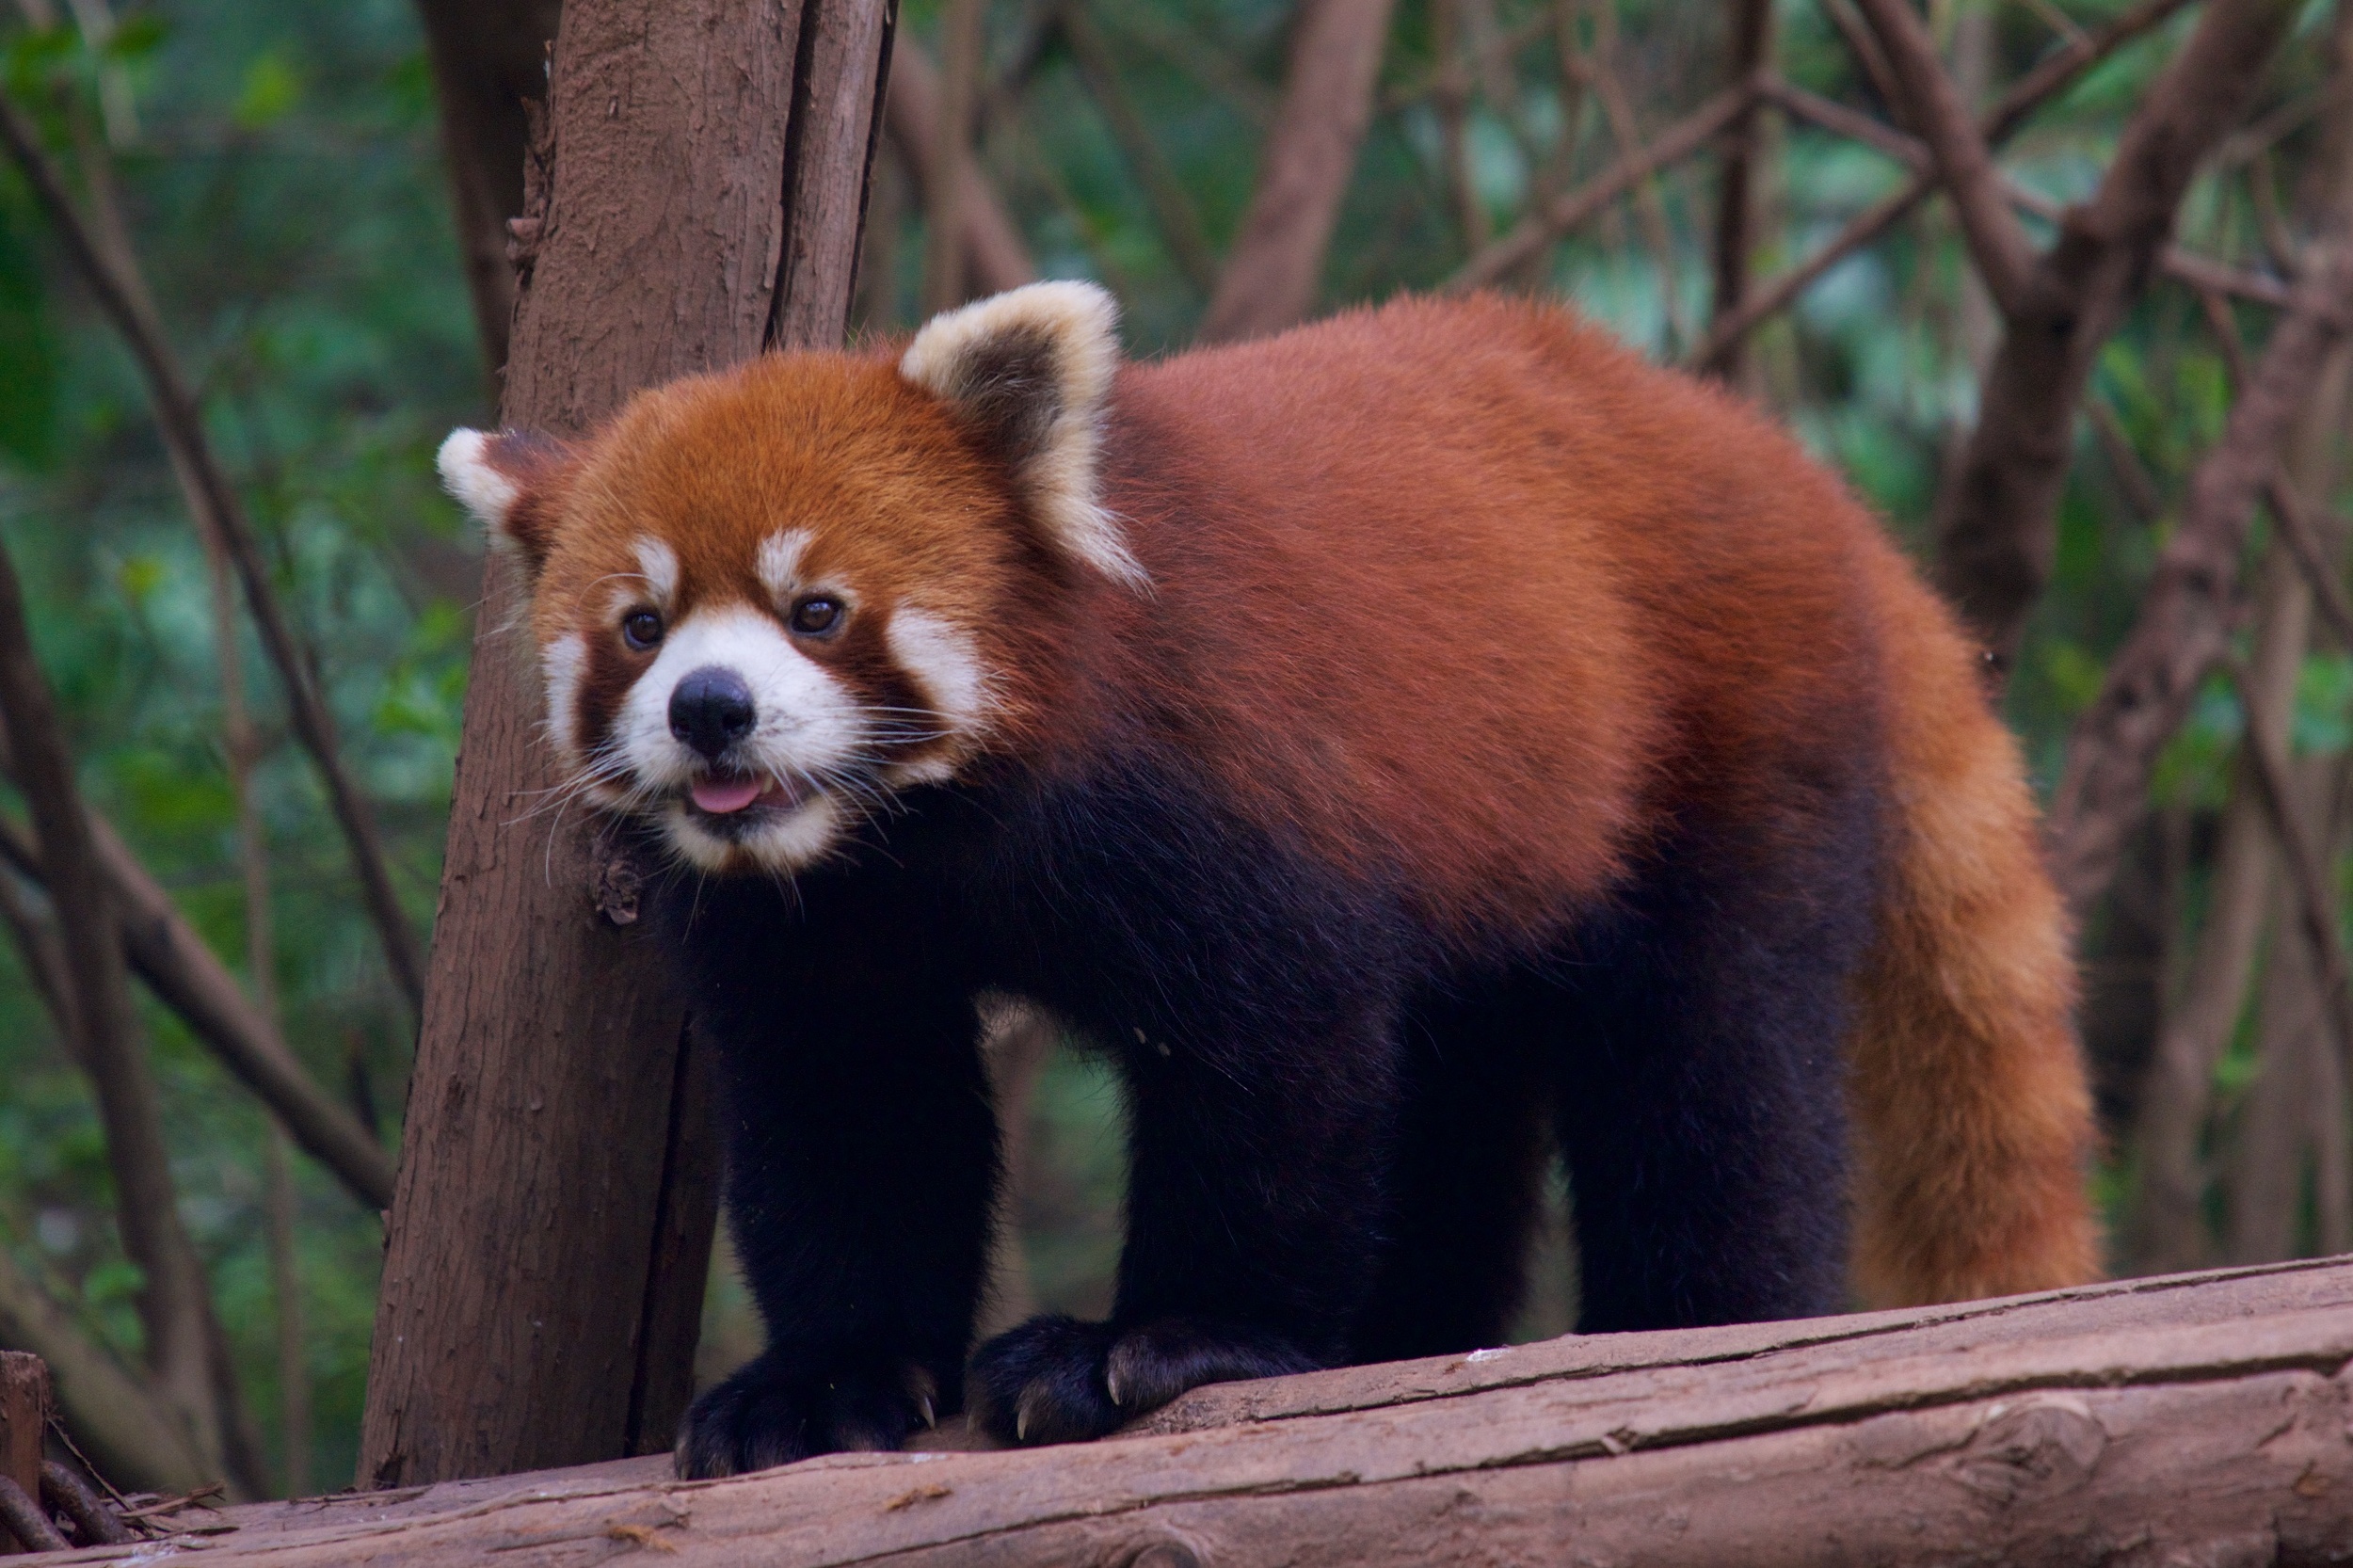  Red panda,&nbsp;Chengdu Research Base of Giant Panda Breeding,&nbsp;Chengdu 